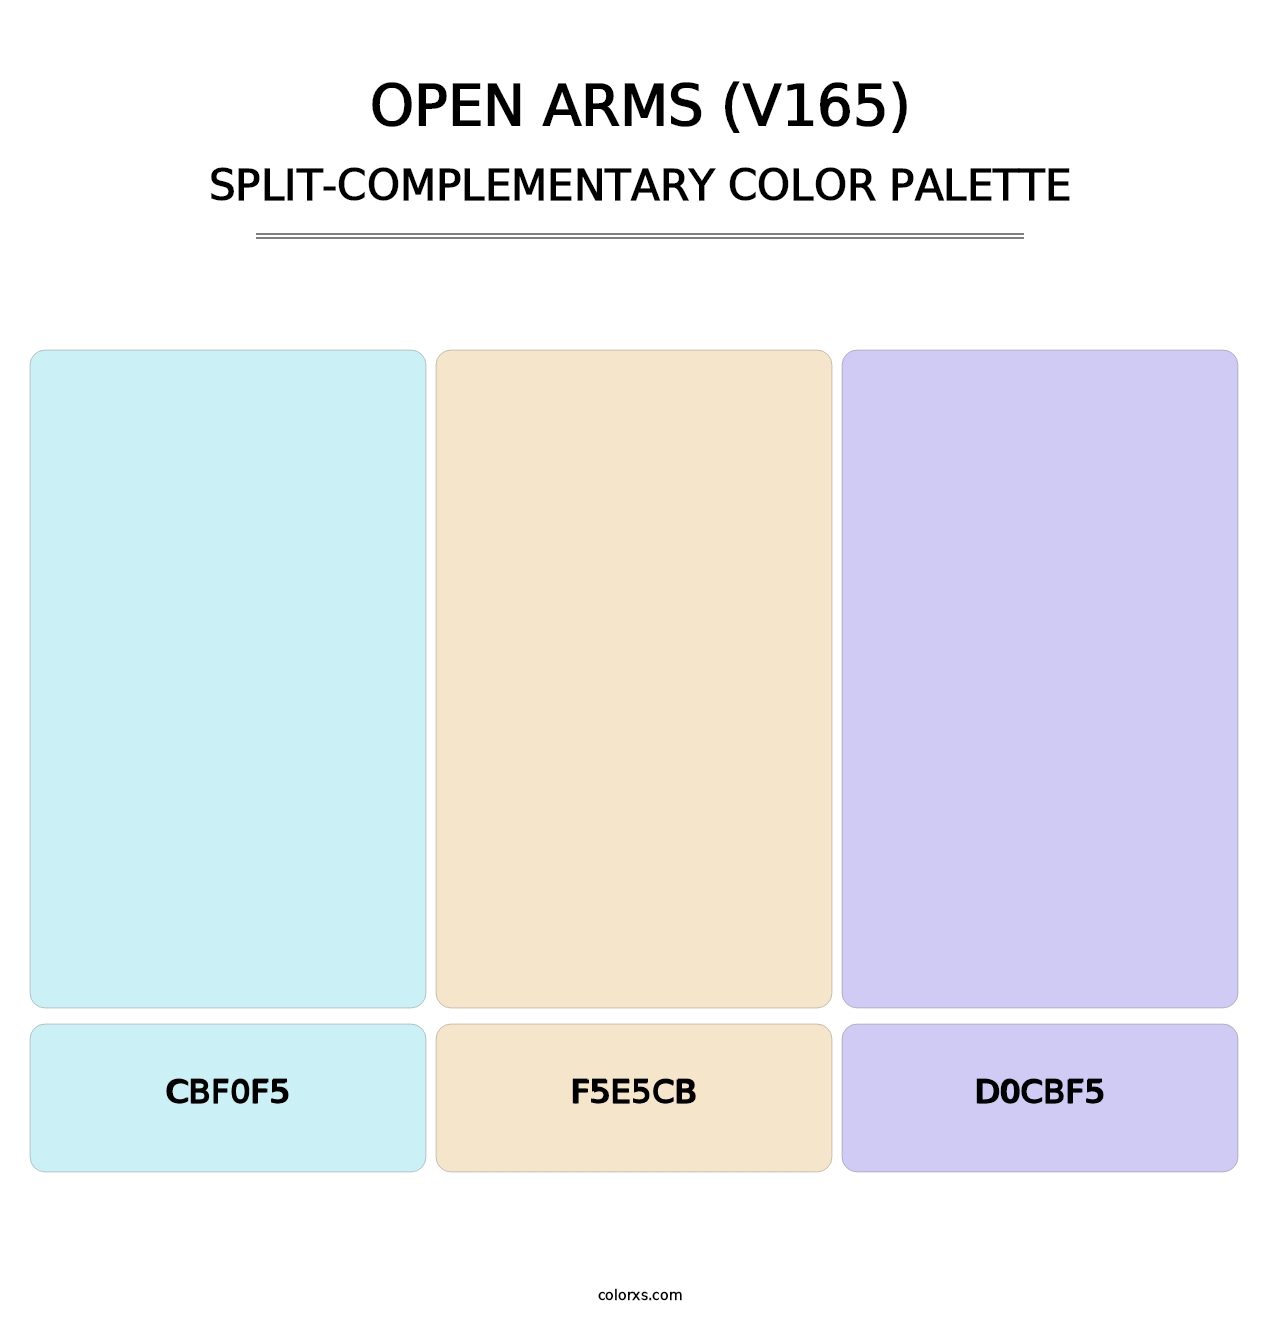 Open Arms (V165) - Split-Complementary Color Palette